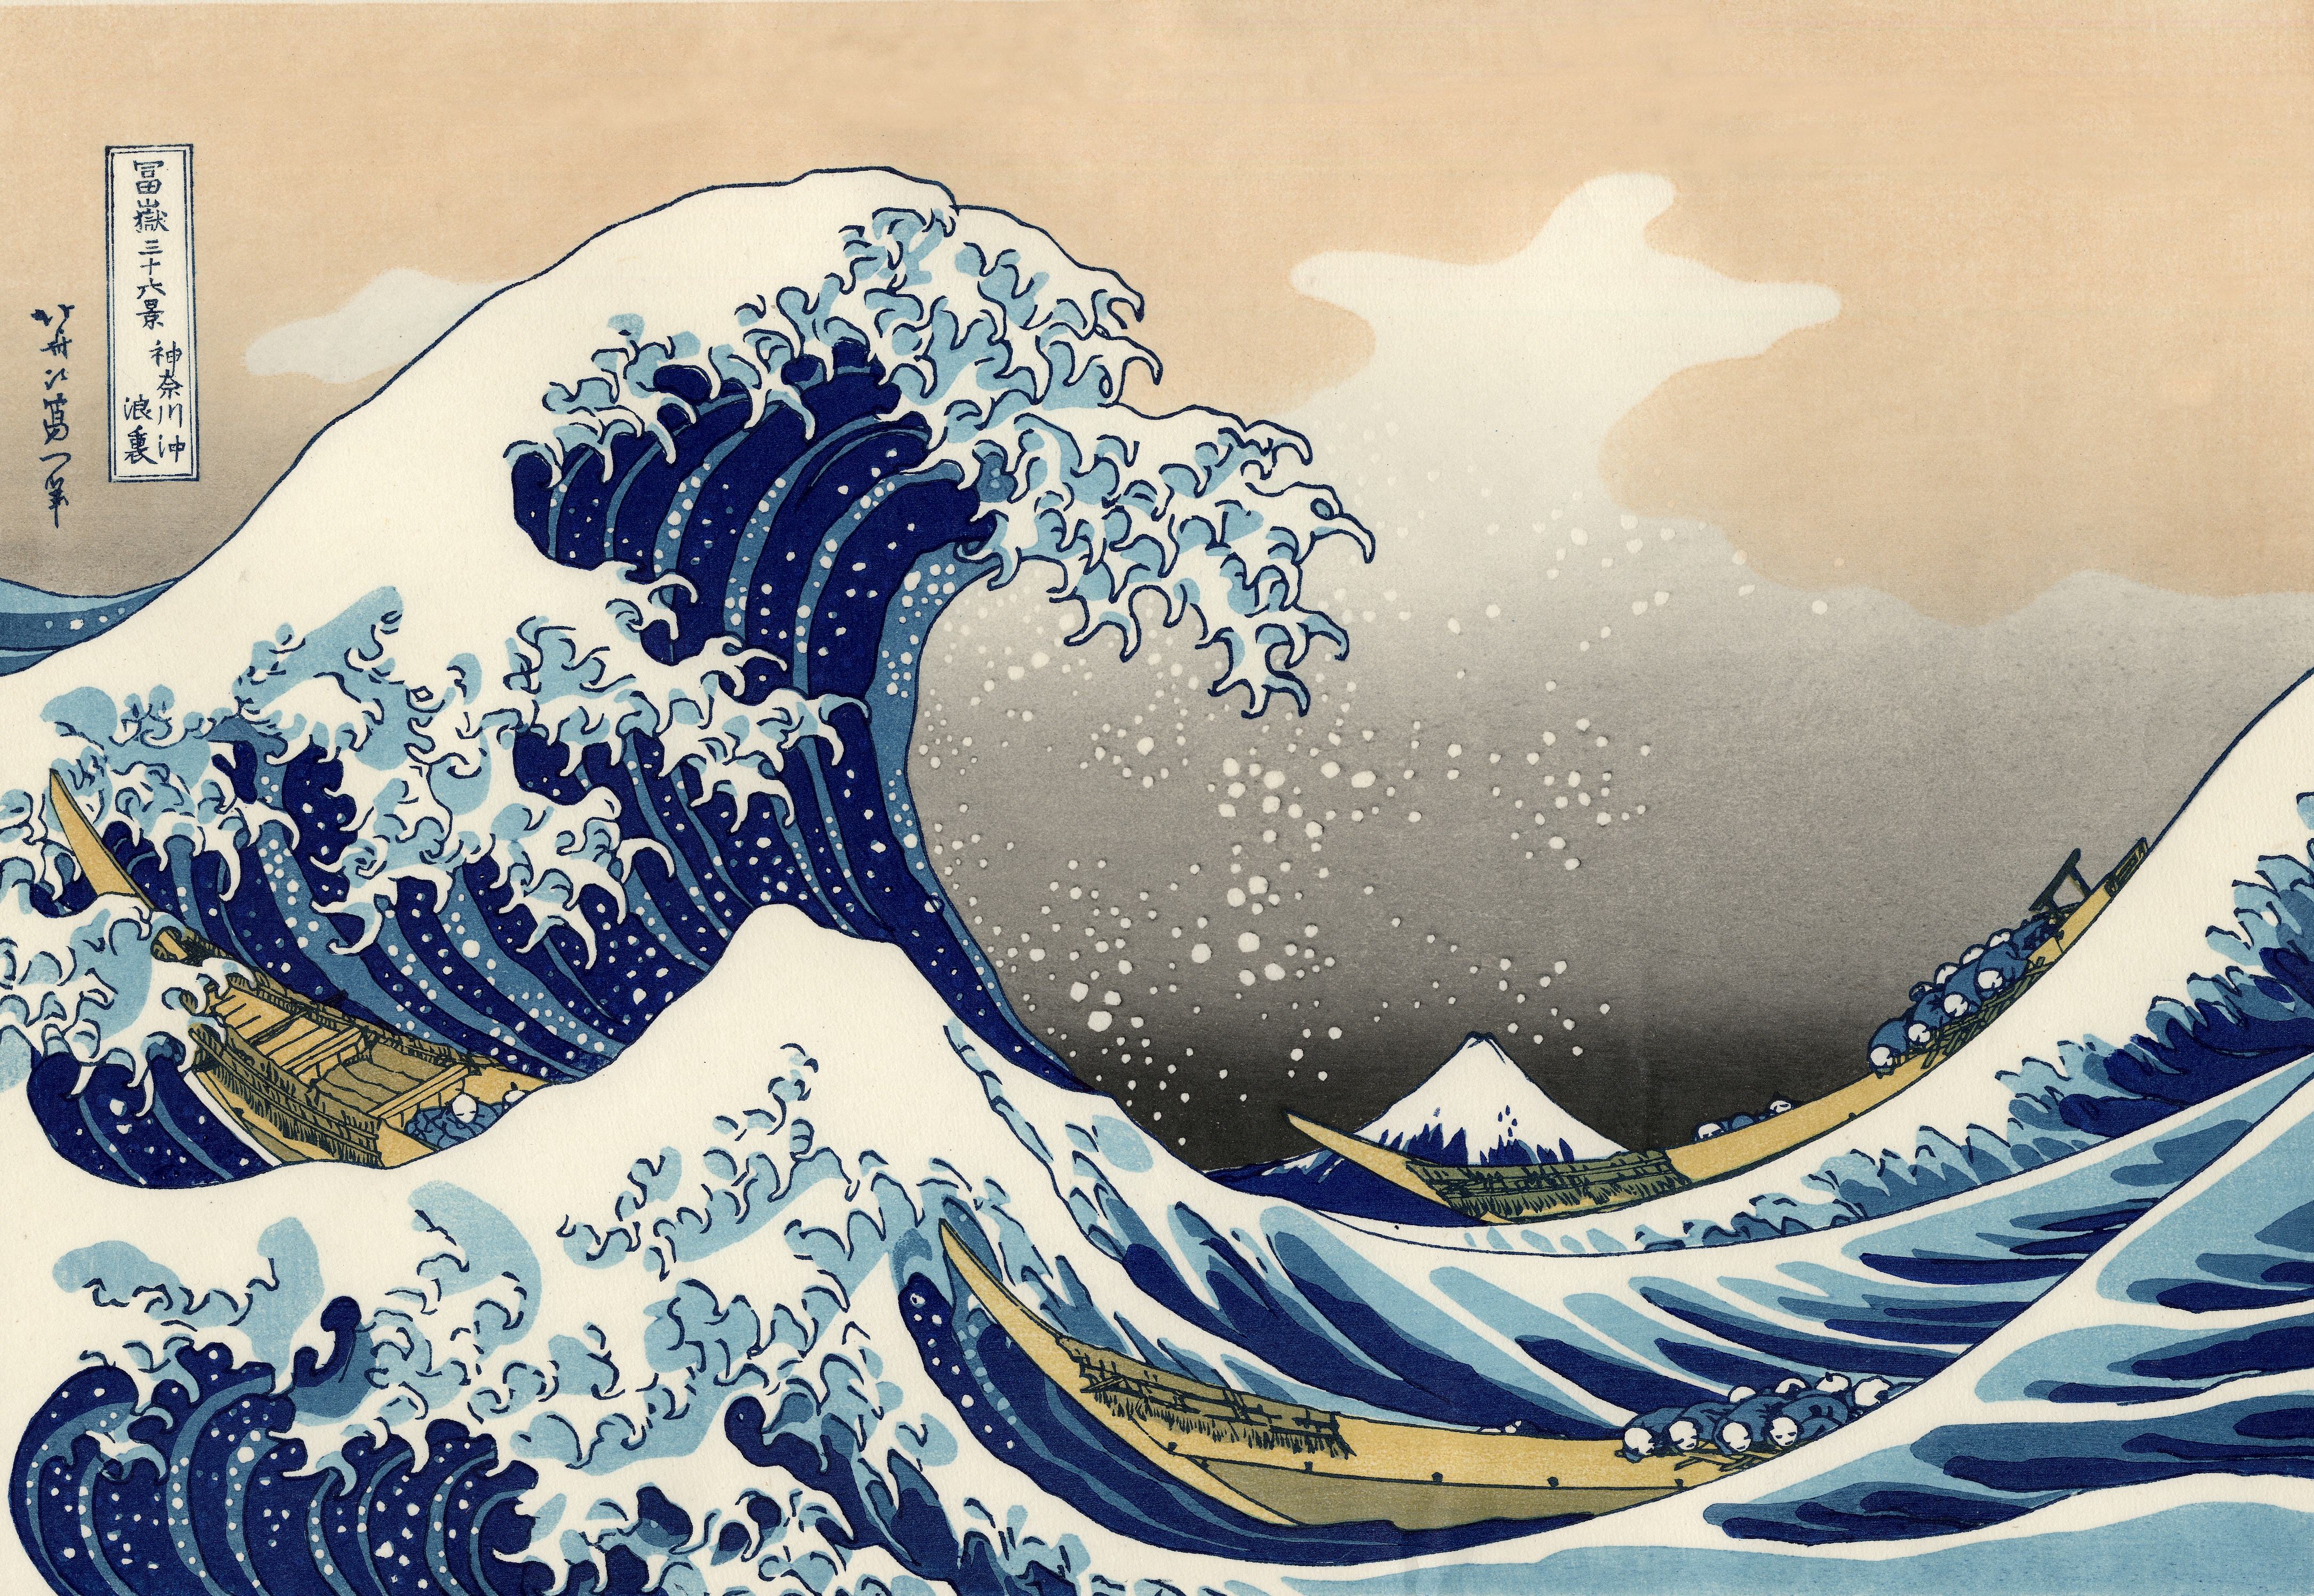 wave, the great wave off kanagawa, artistic phone wallpaper